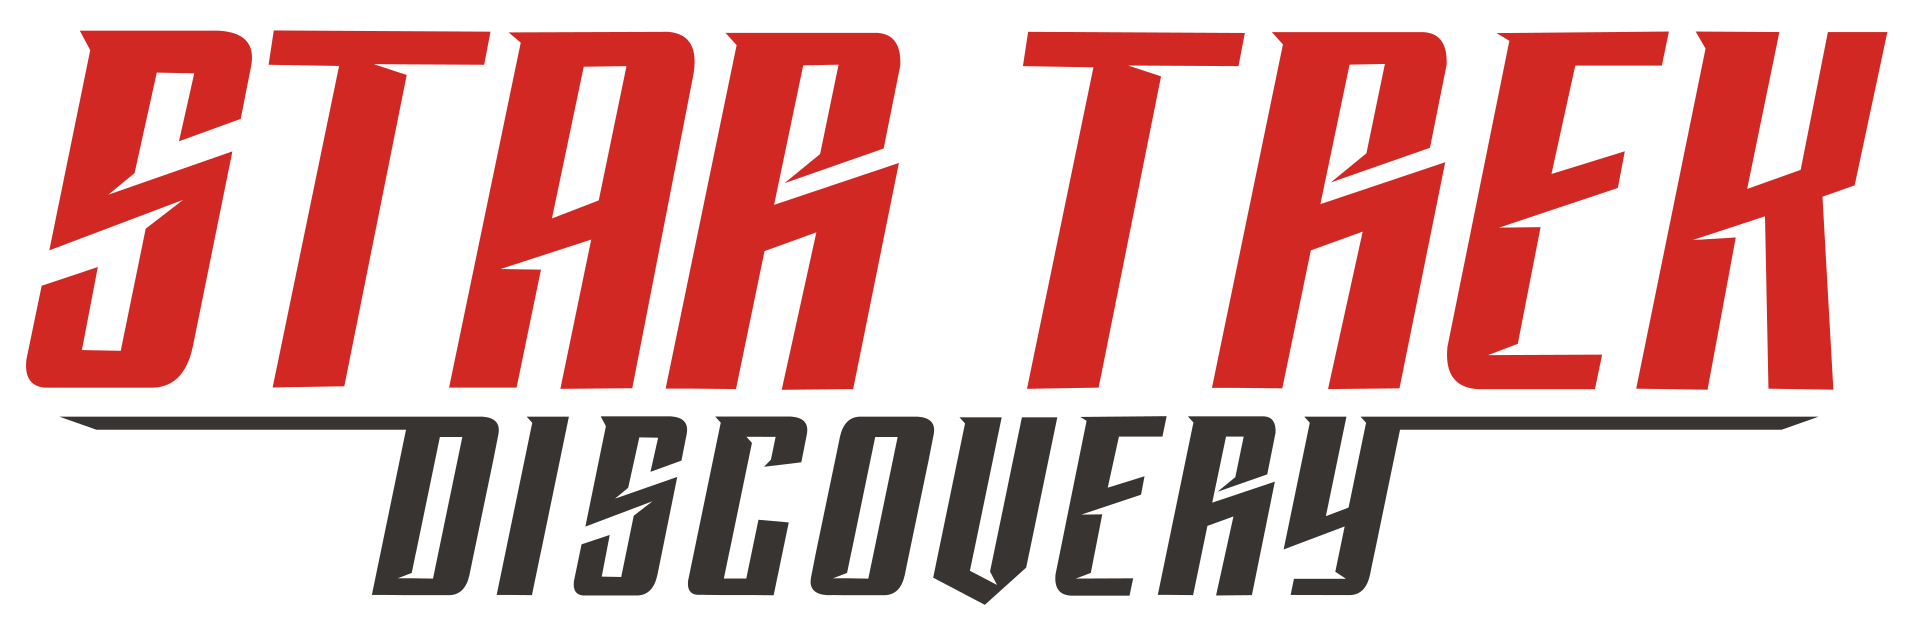 Logo Star Trek : Discovery